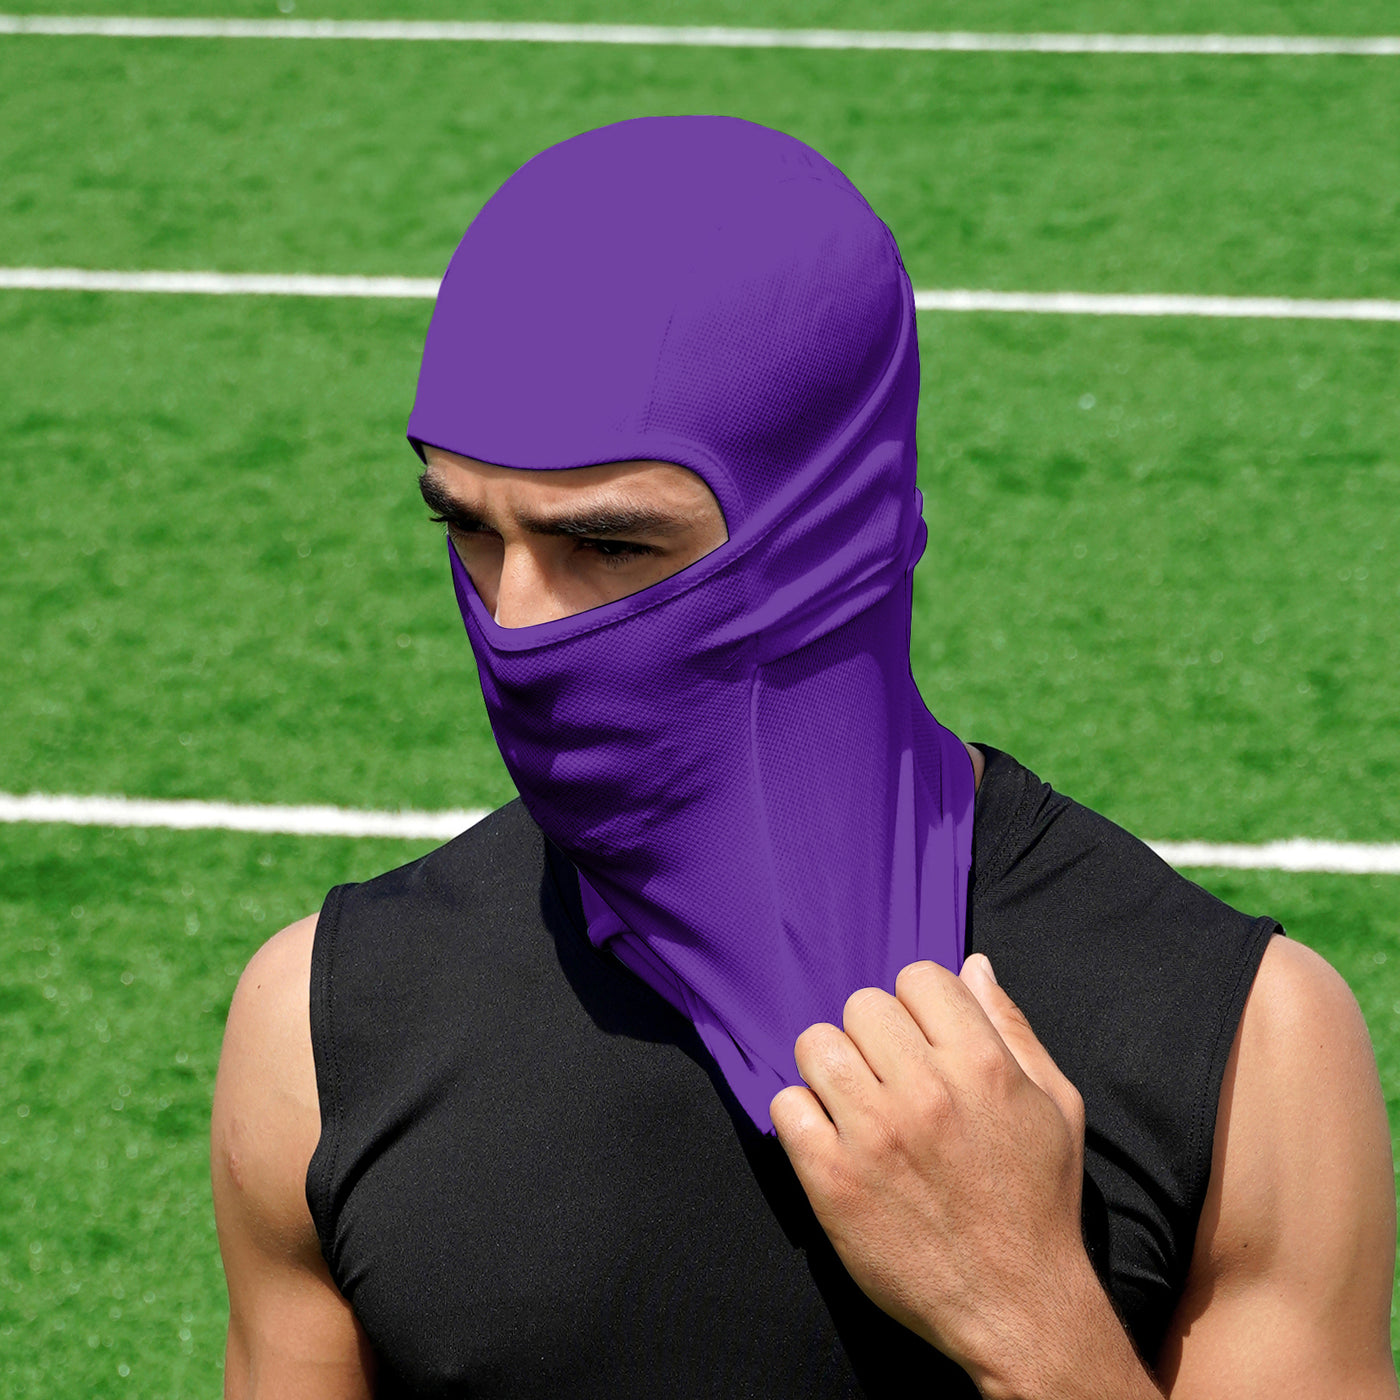 Hue Purple Loose-fitting Shiesty Mask